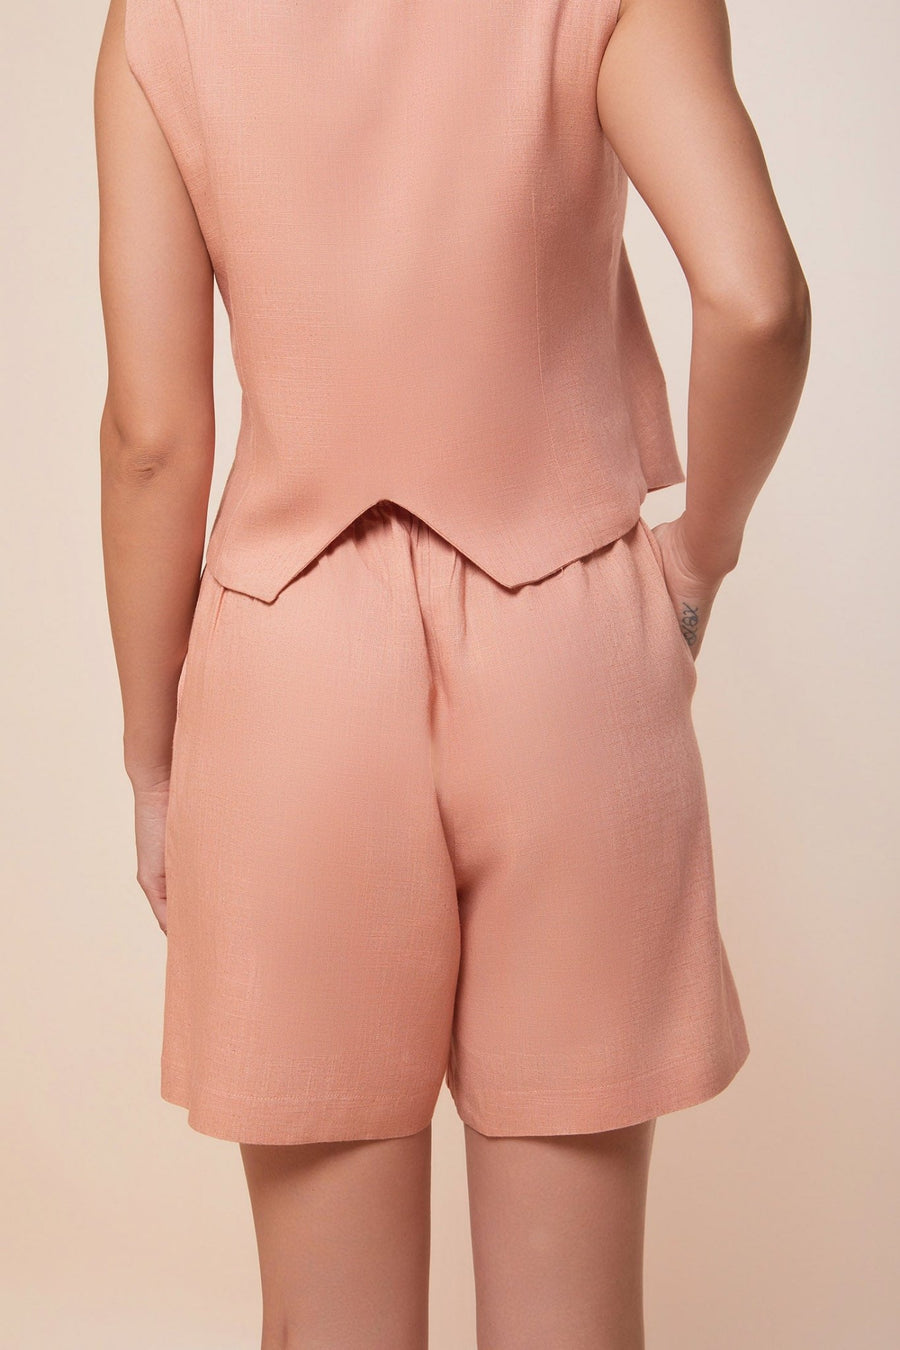 peach shorts - nahlaelalfydesigns